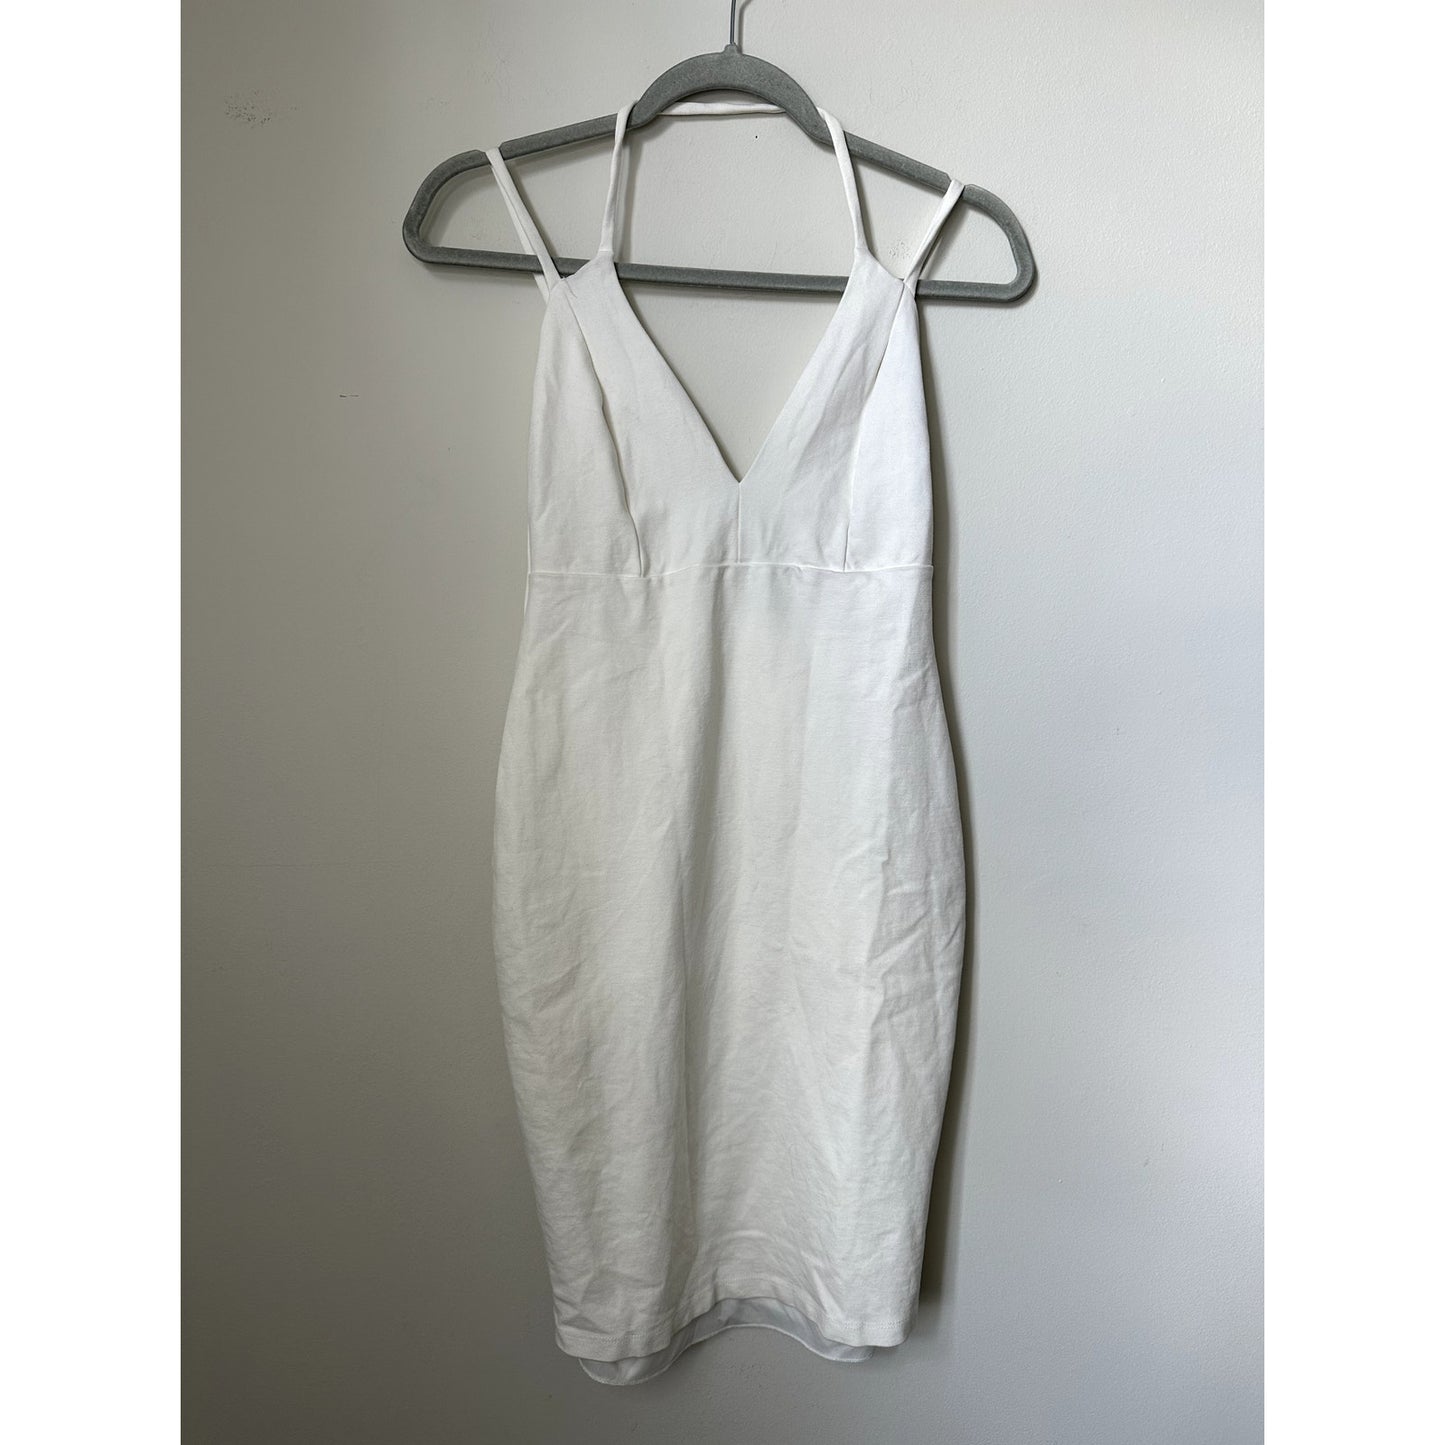 Lulus White Bodycon Strappy Formal Dress, Size M